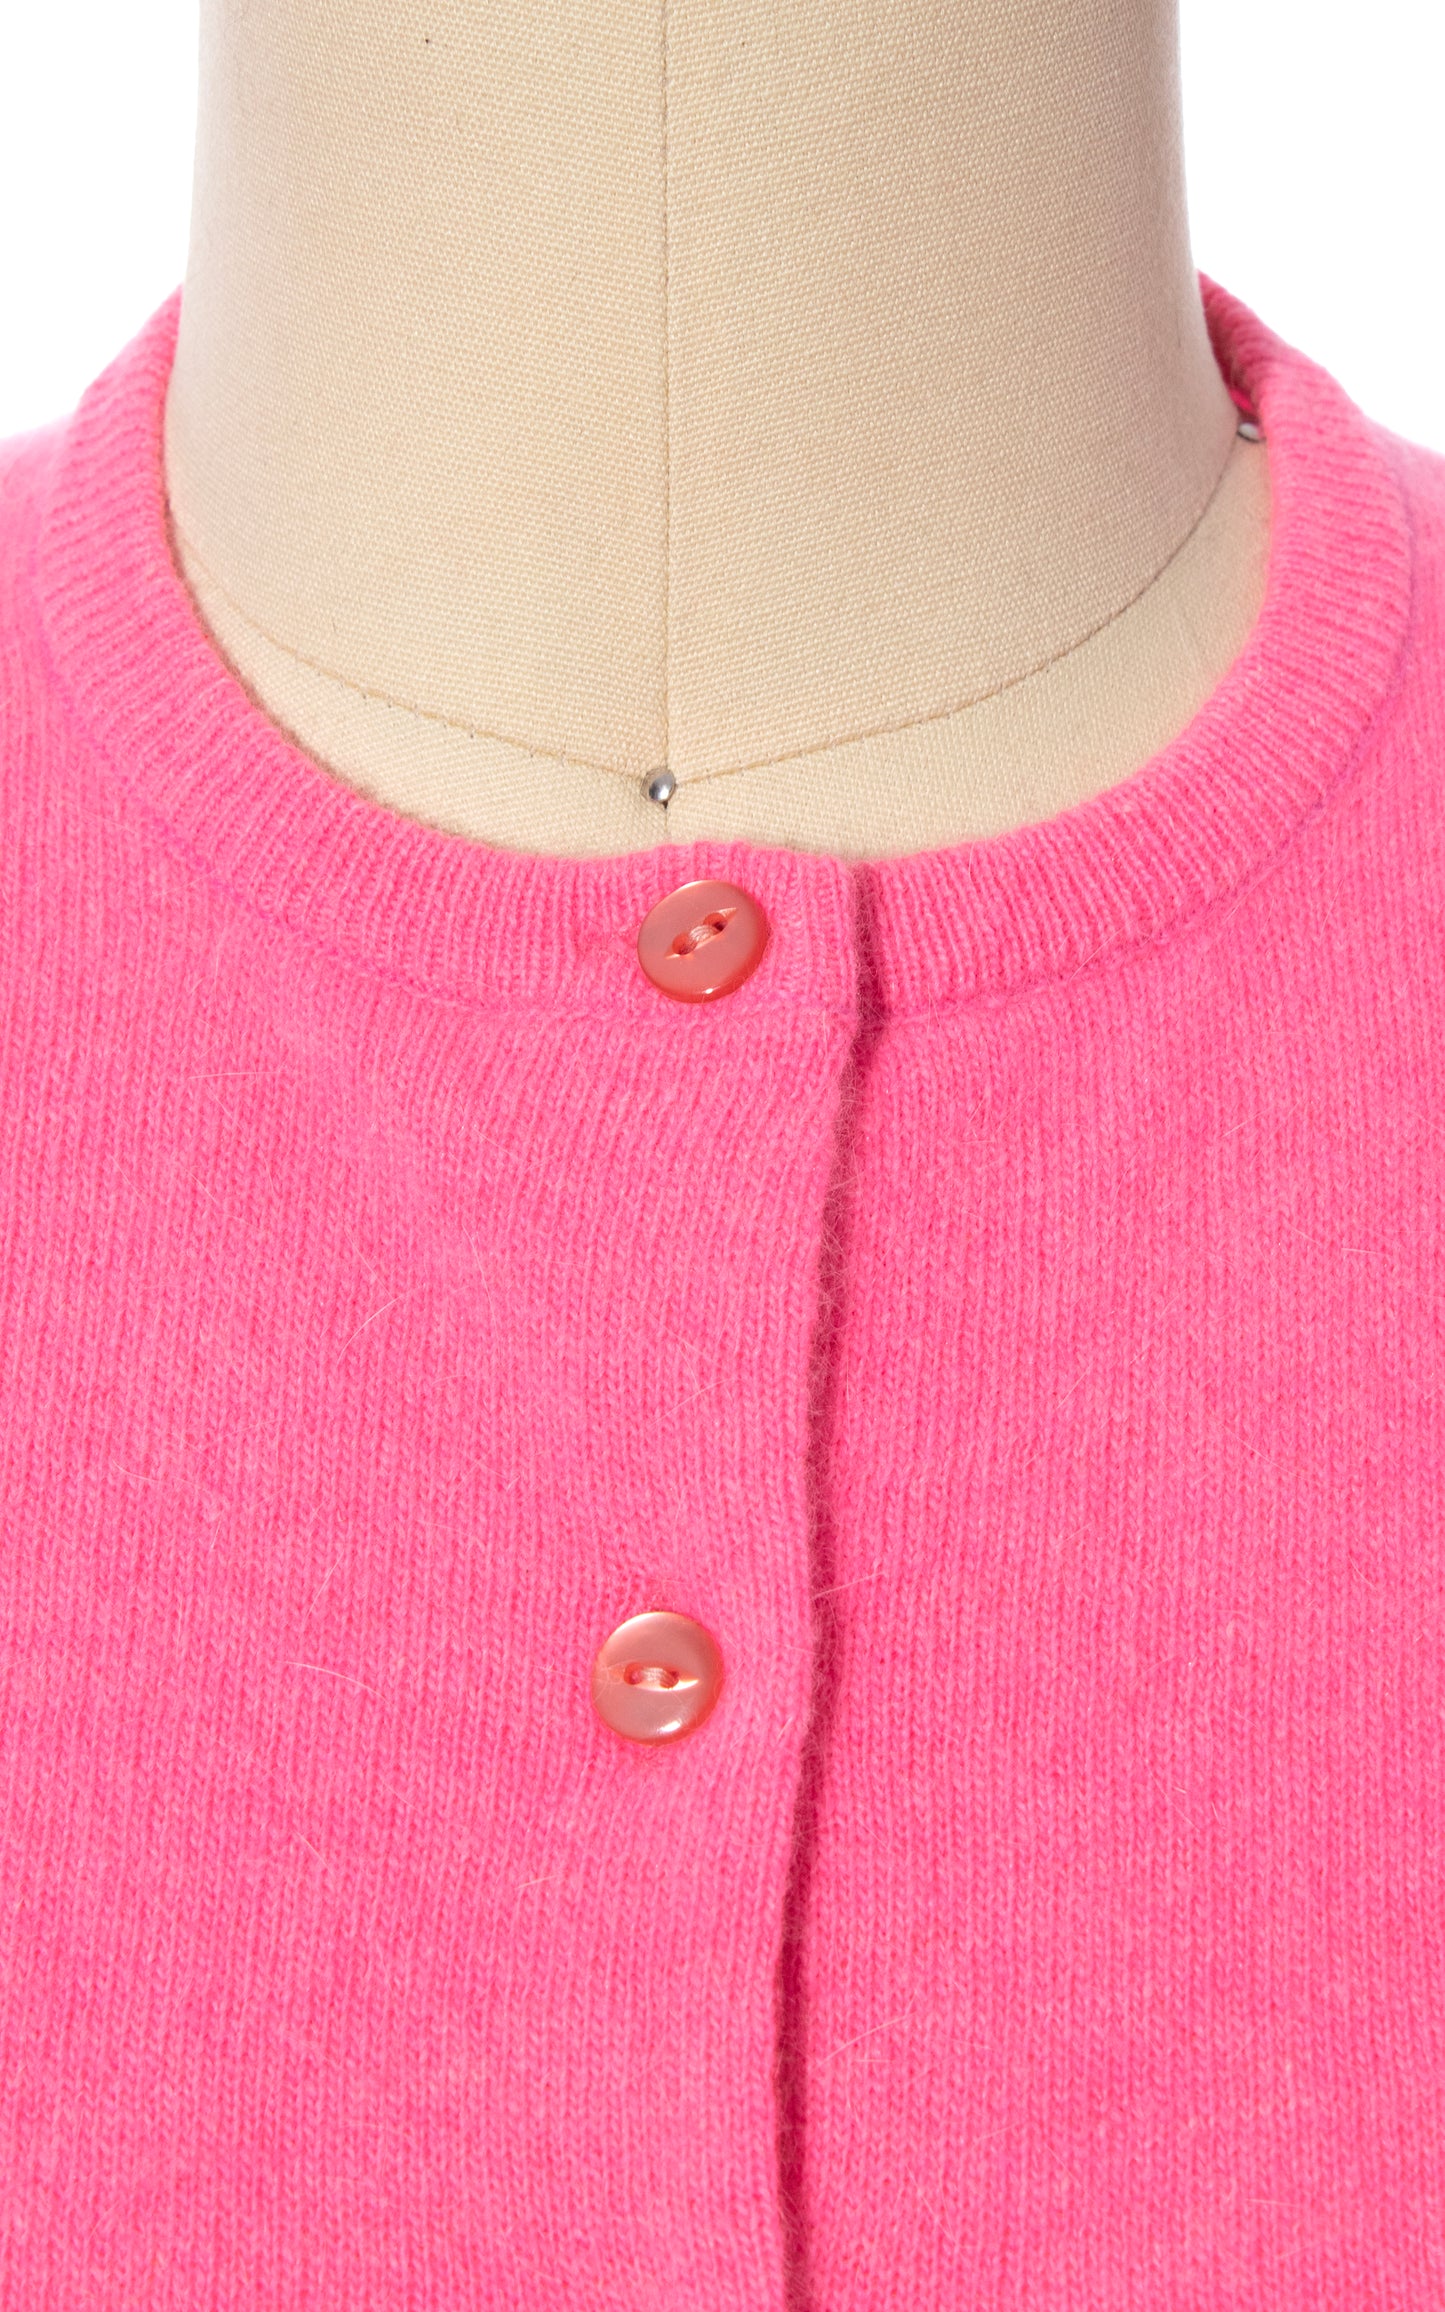 Vintage 60s 1960s Hot Pink Angora Blend Knit Cardigan BirthdayLifeVintage